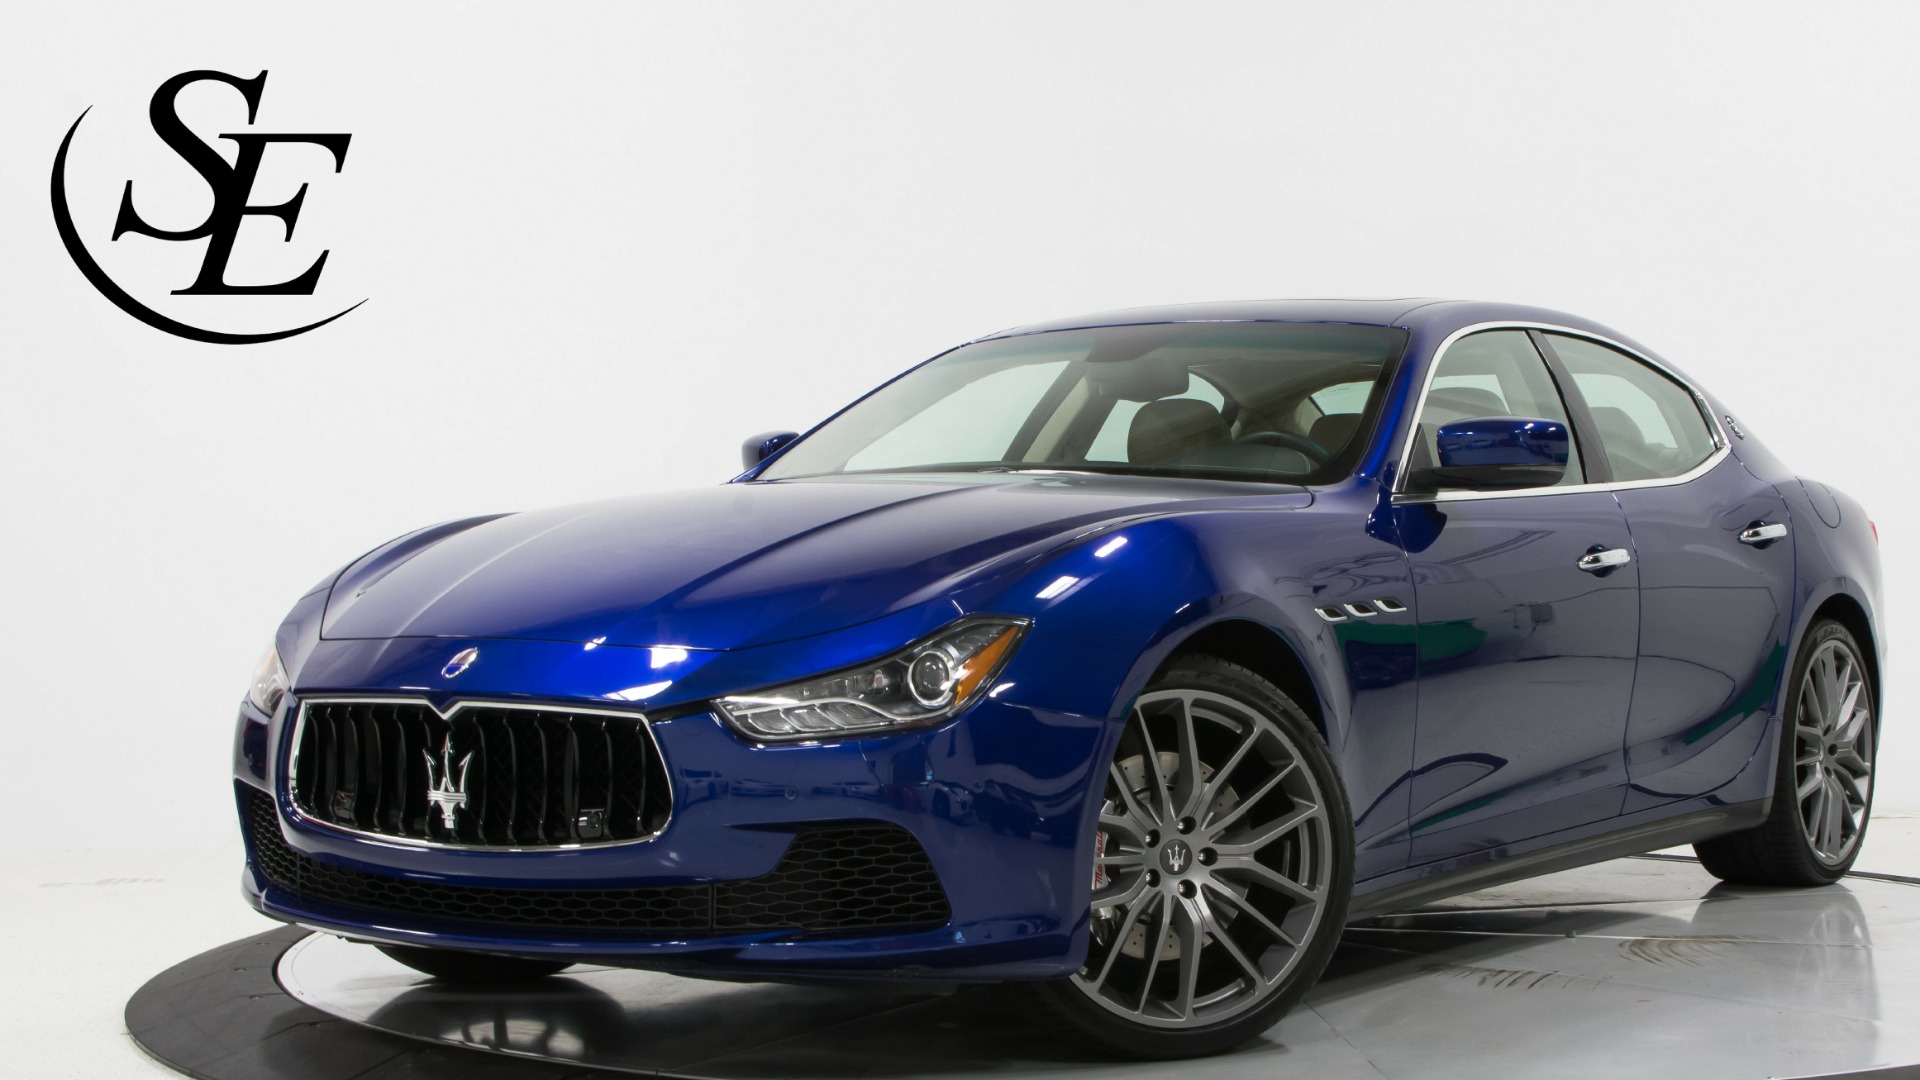 2015 Maserati Ghibli S Q4 Stock 22648 For Sale Near